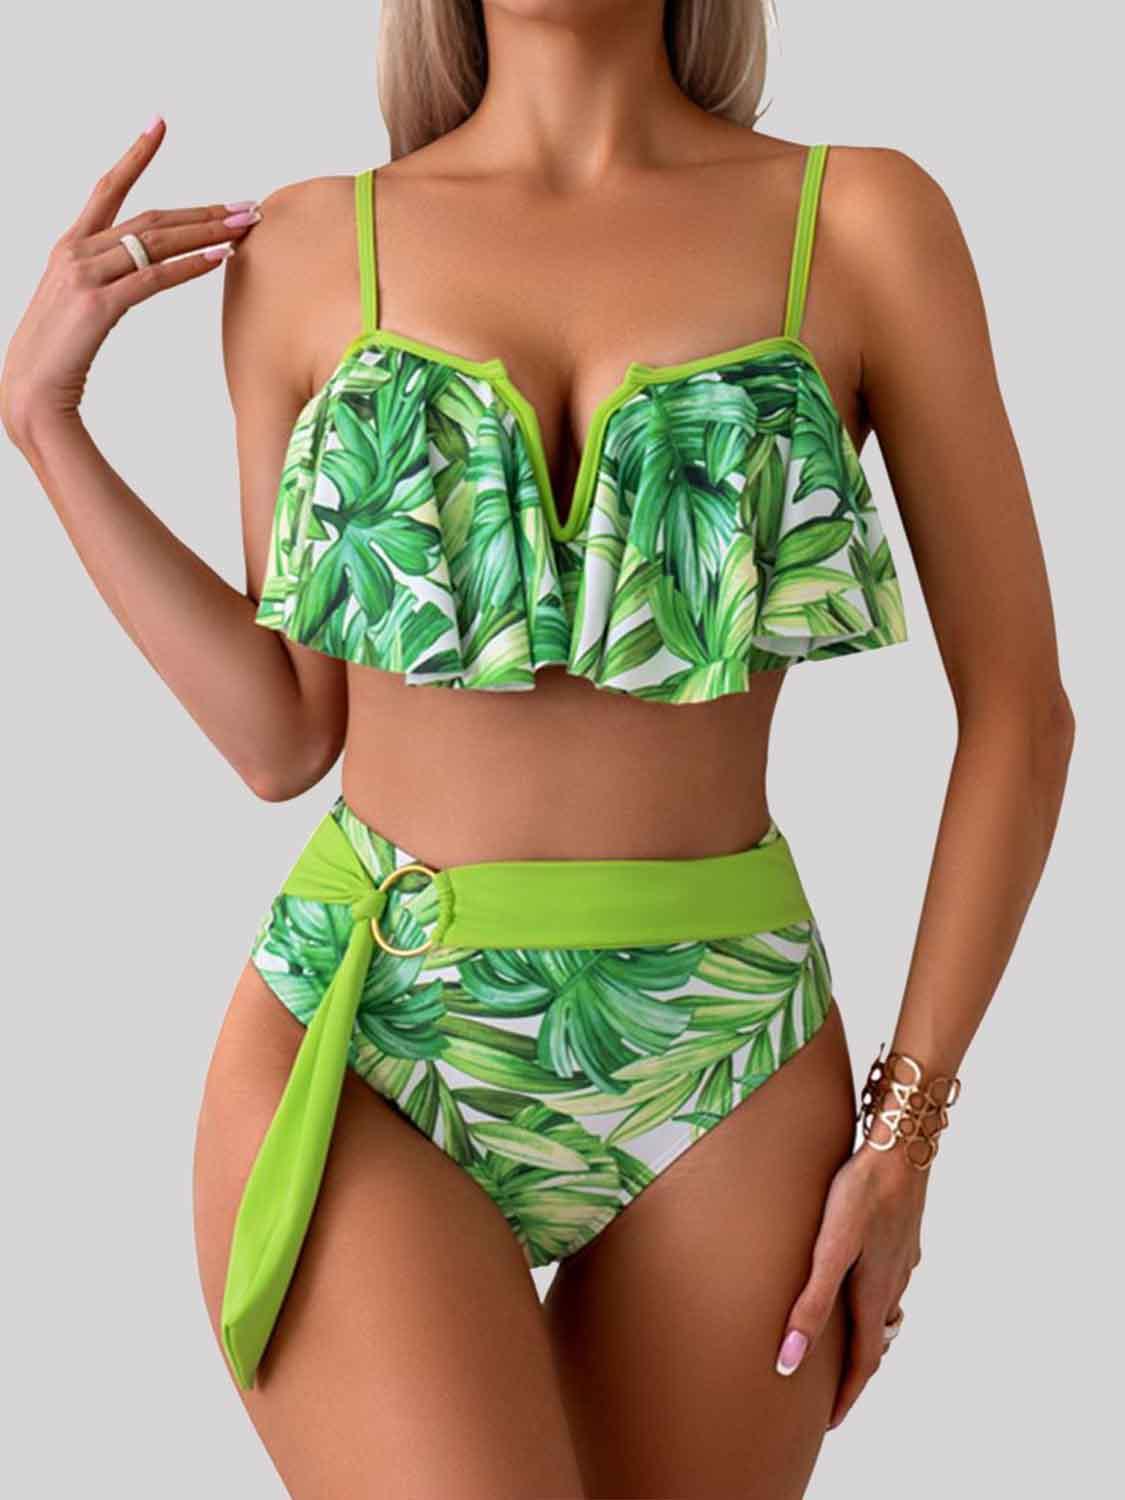 a woman in a green bikini top and matching panties